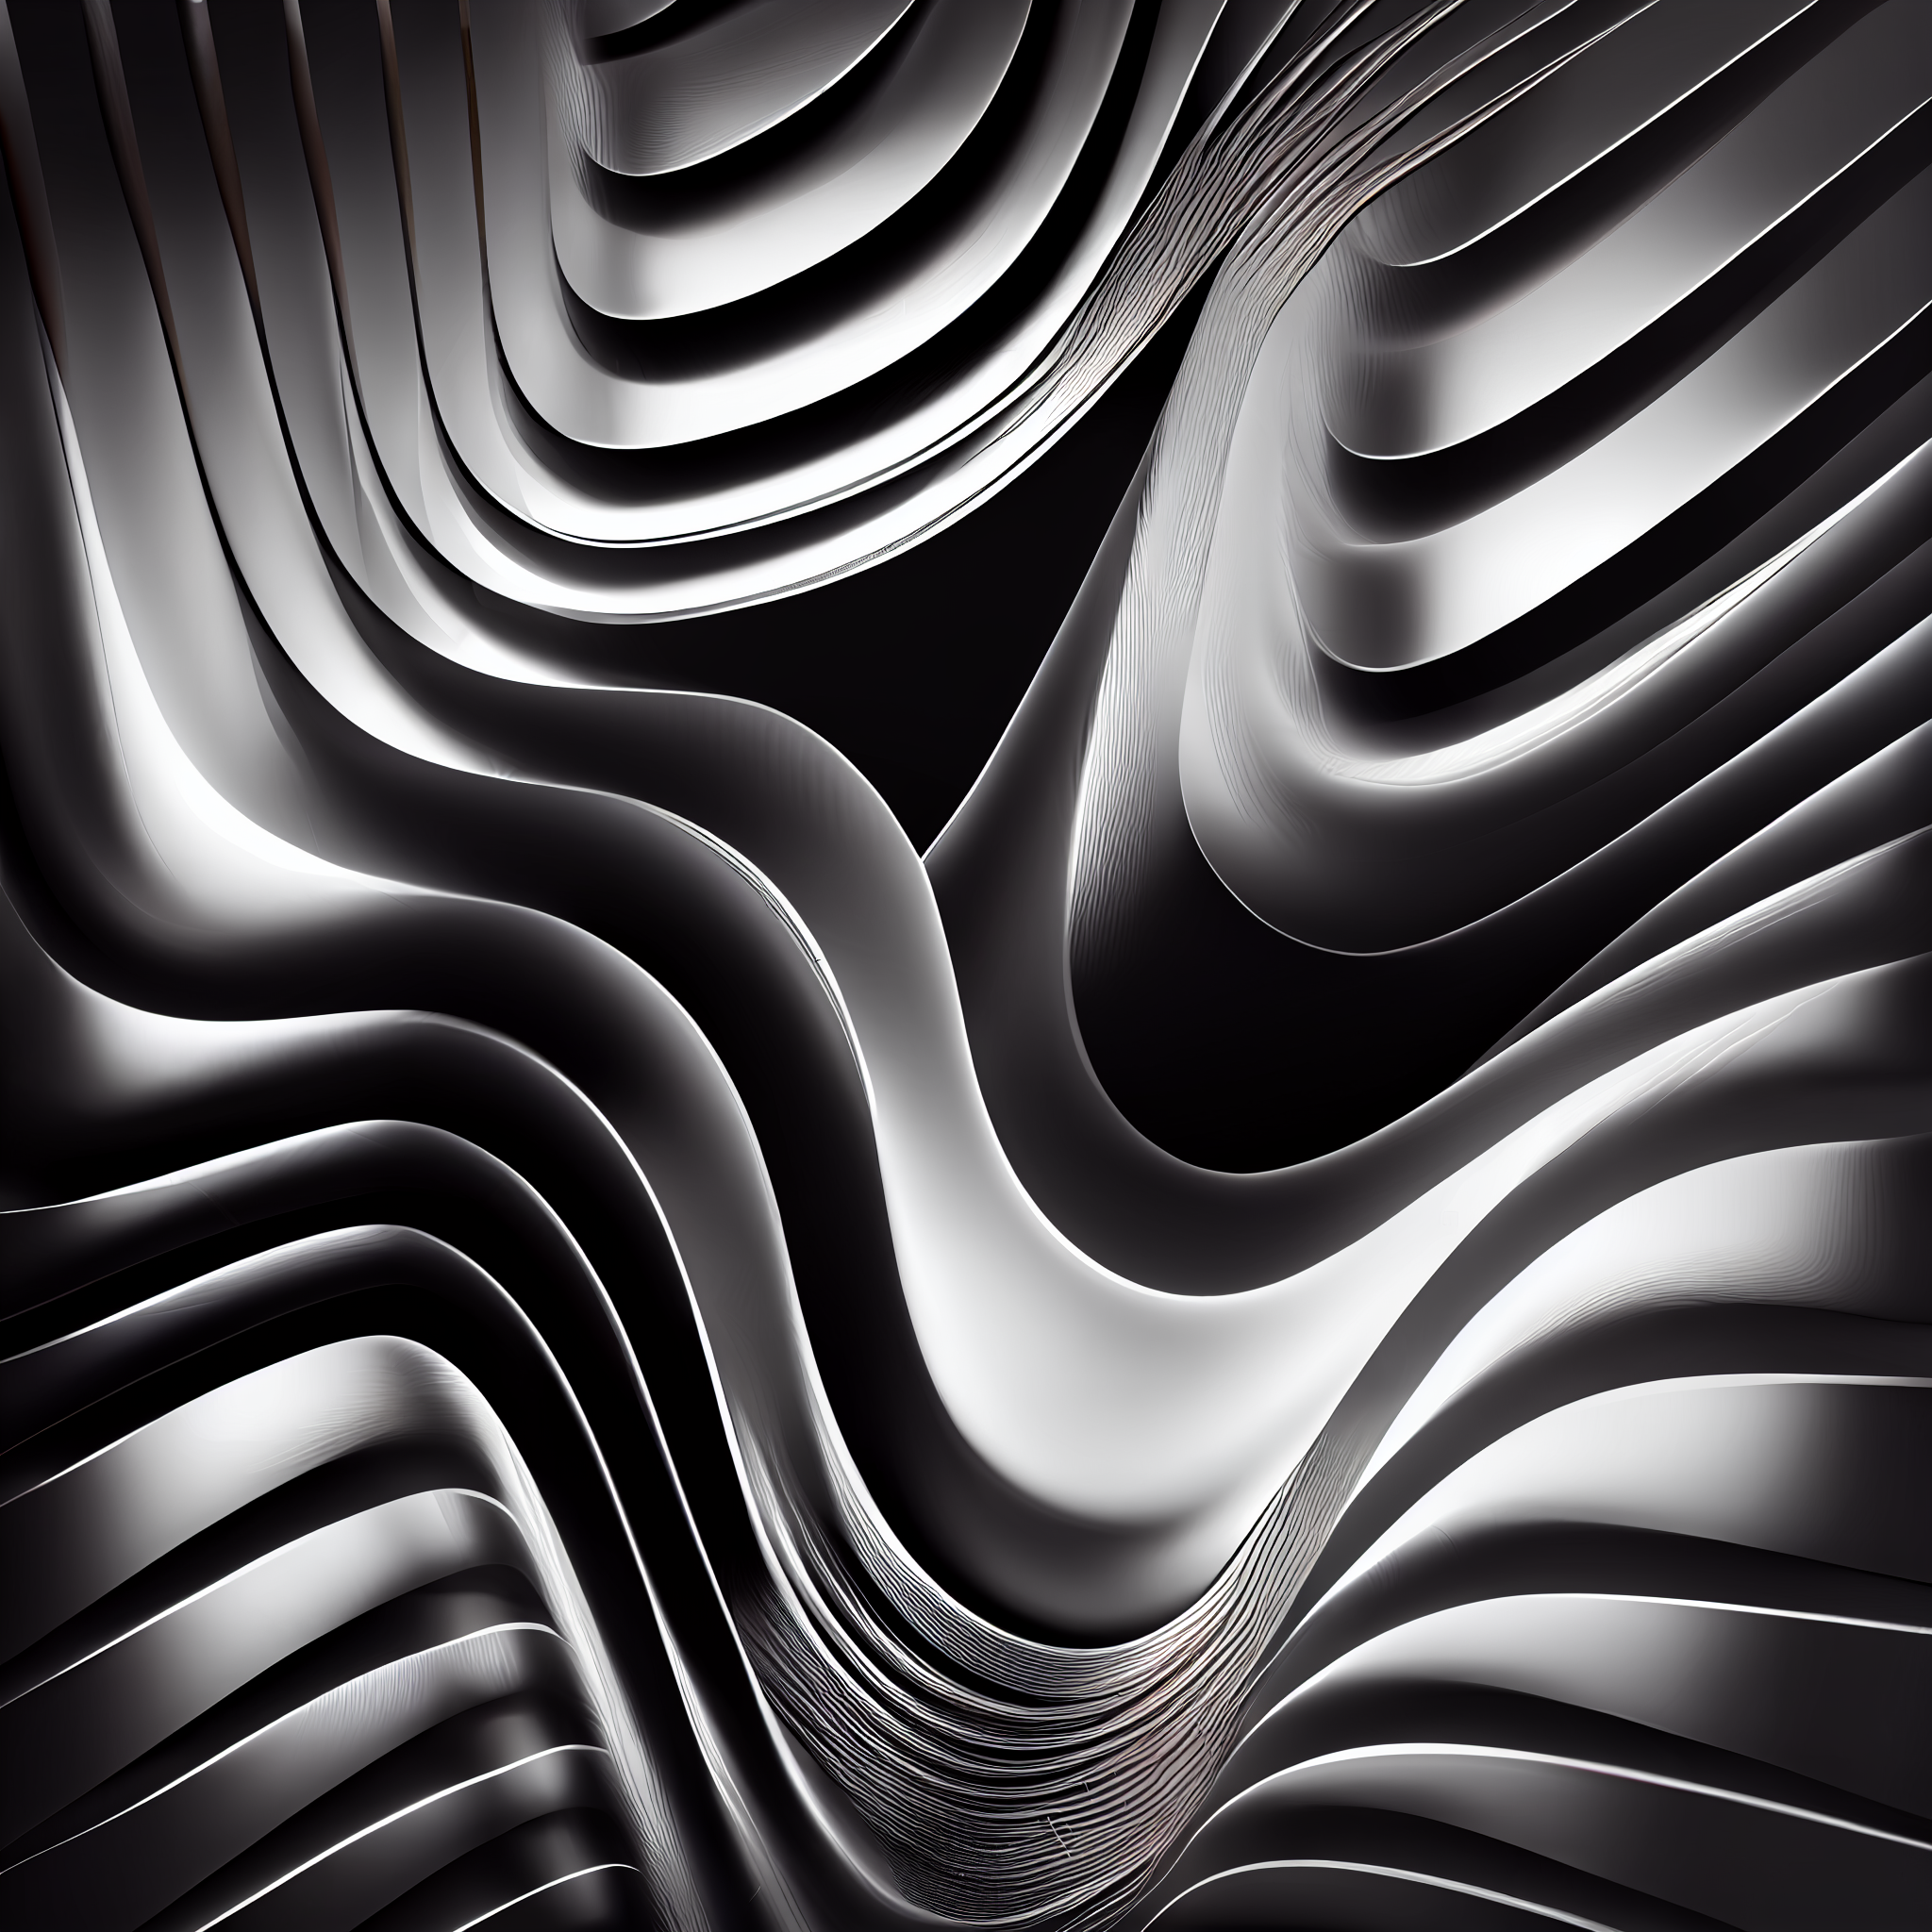 Vibrant Waves: Dynamic Black Lines Airbrush Art Print on White Background